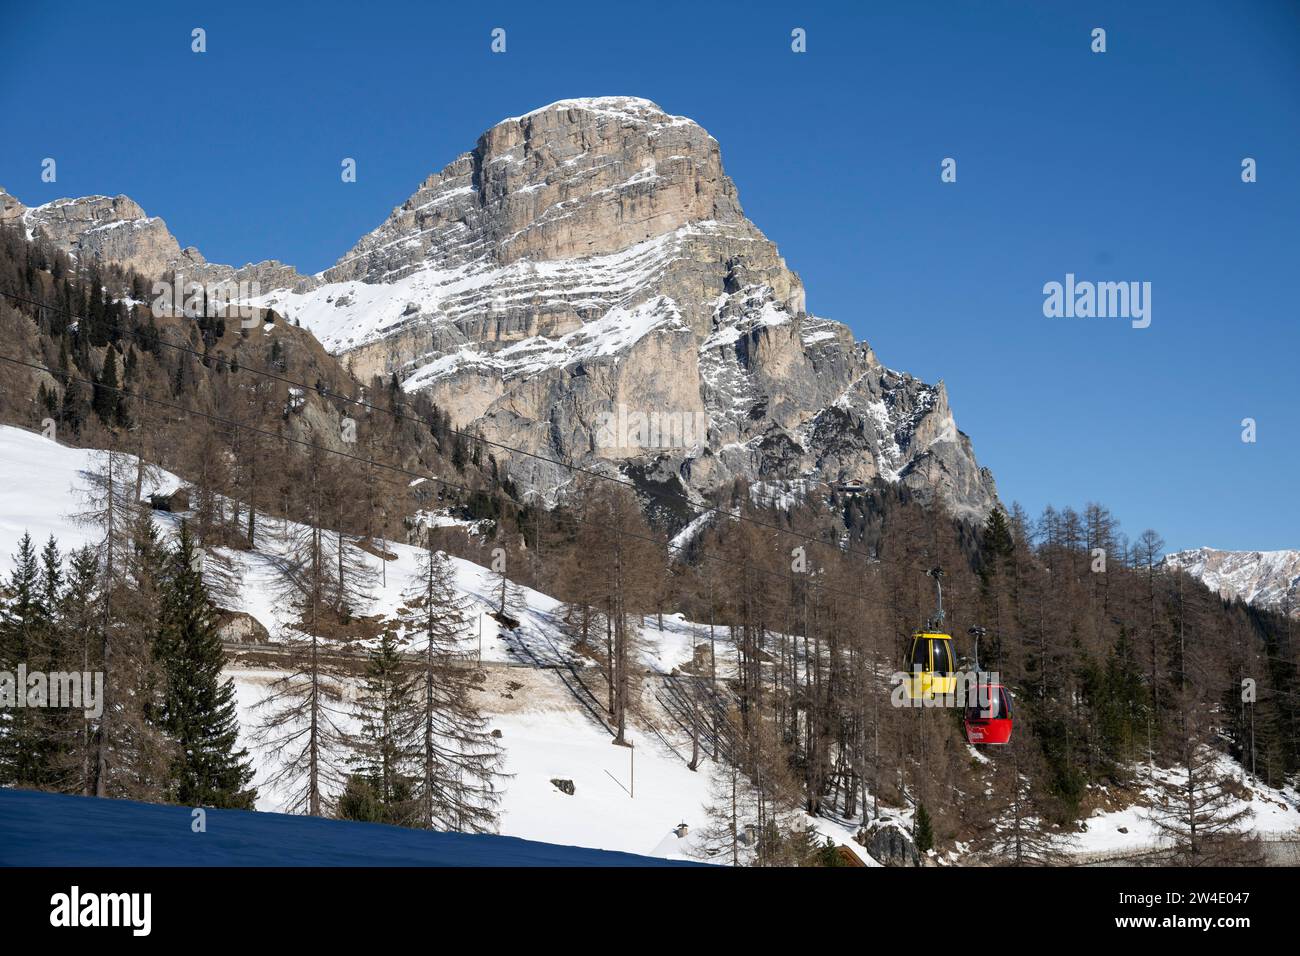 Sassongher, Frara gondola lift, Colfosco, ski resort, Sella Ronda, Autonomous Region of Trento, South Tyrol, Italy Stock Photo